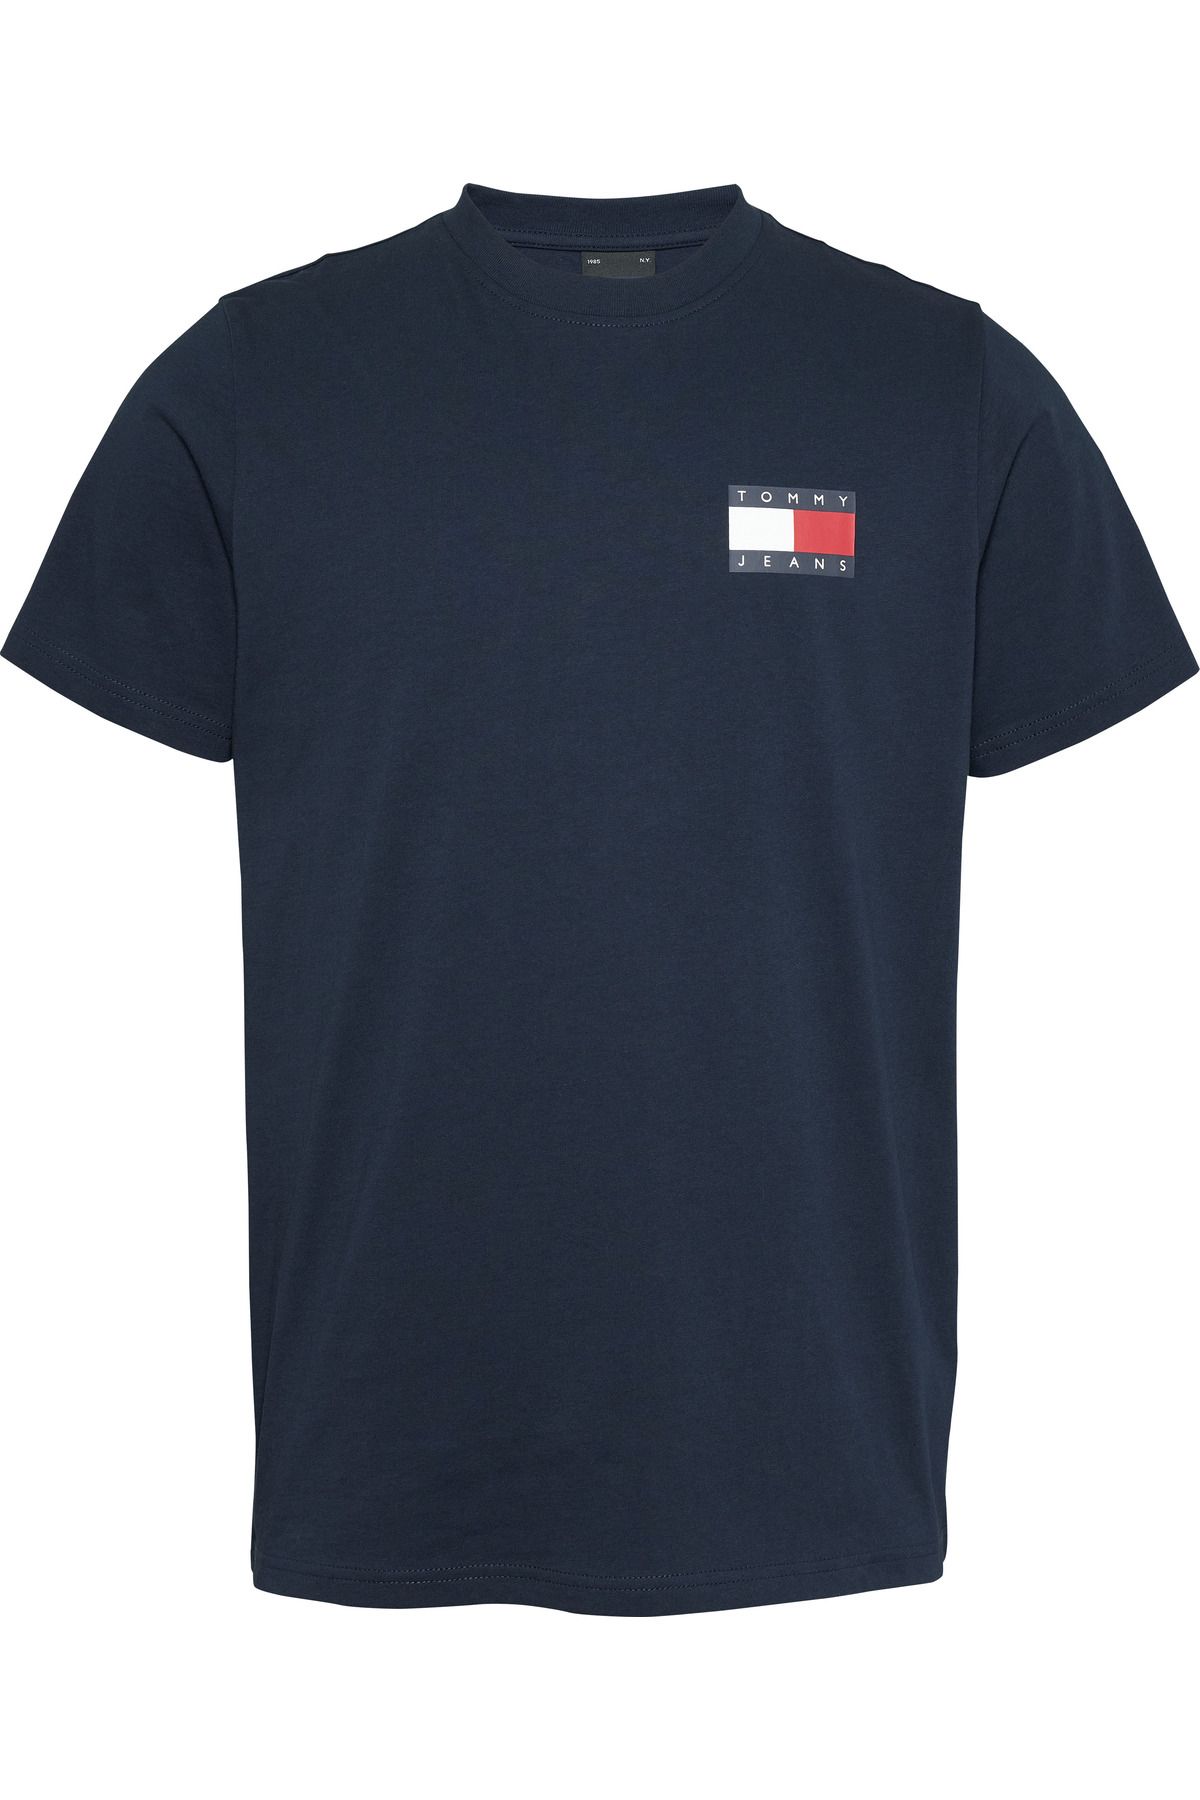 Tommy Hilfiger Erkek Marka Logolu Organik Pamuklu Bisiklet Yakalı Lacivert T-shirt Dm0dm18263-c1g